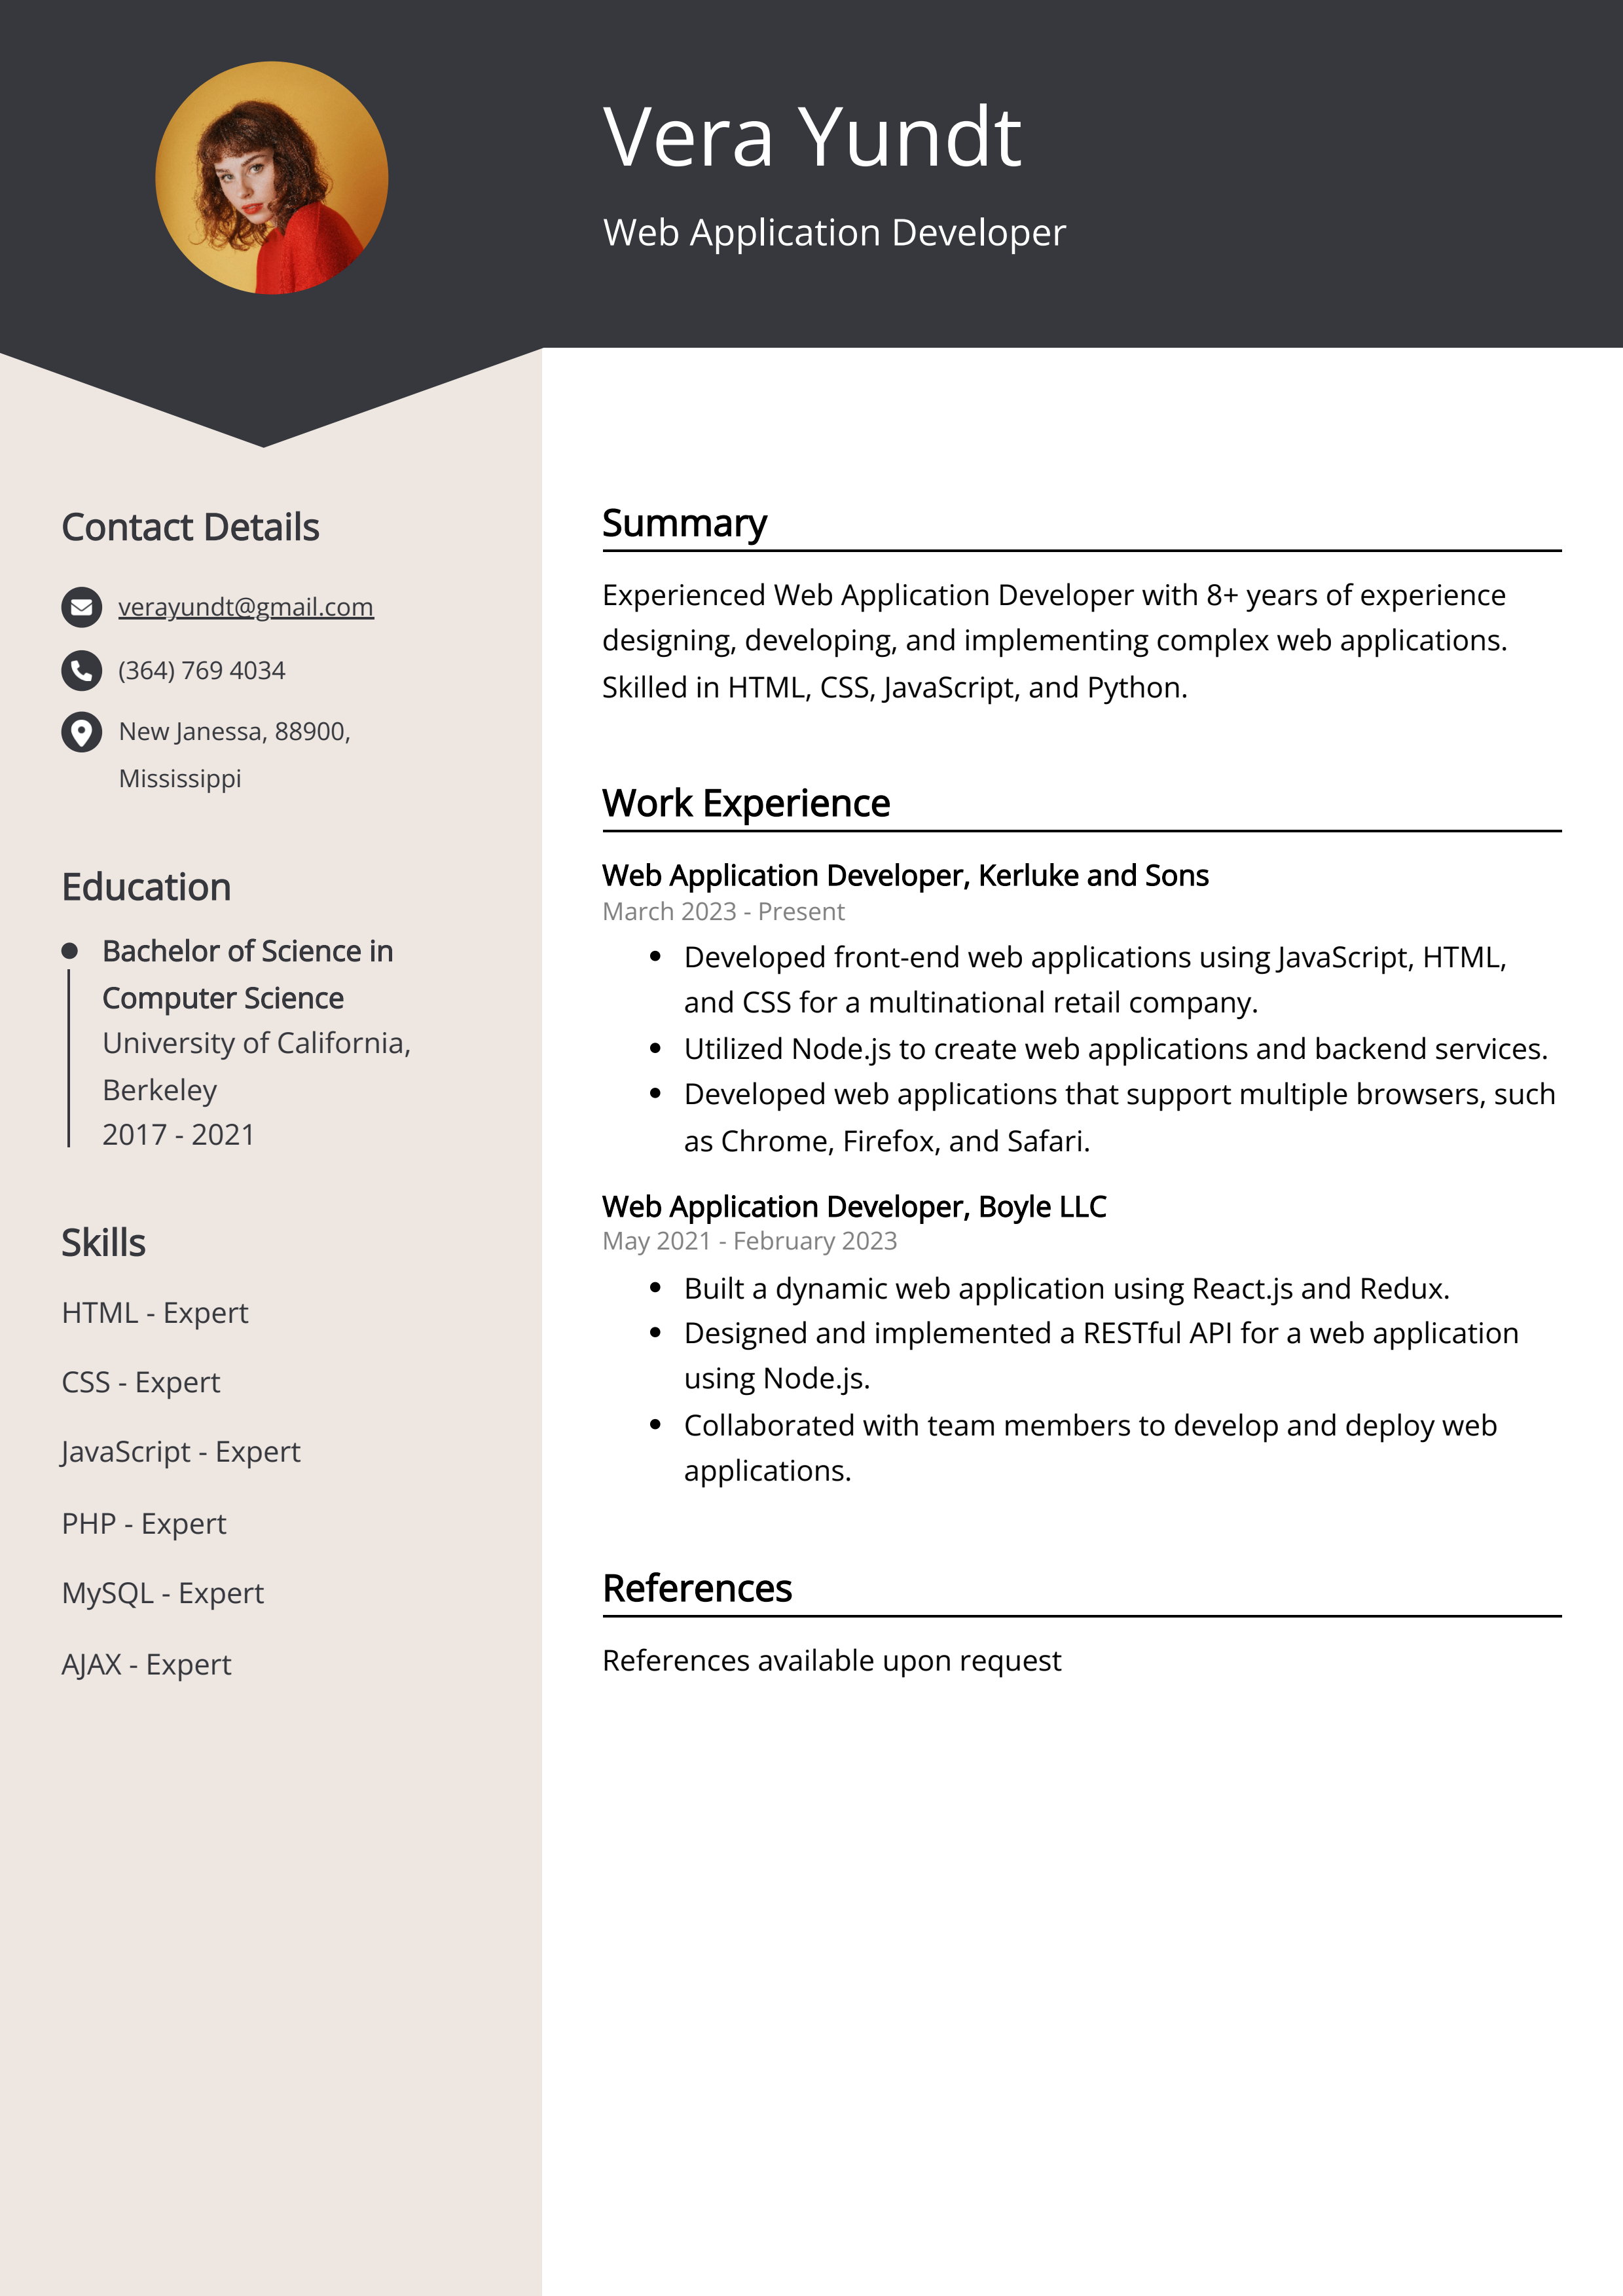 Web Application Developer CV Example